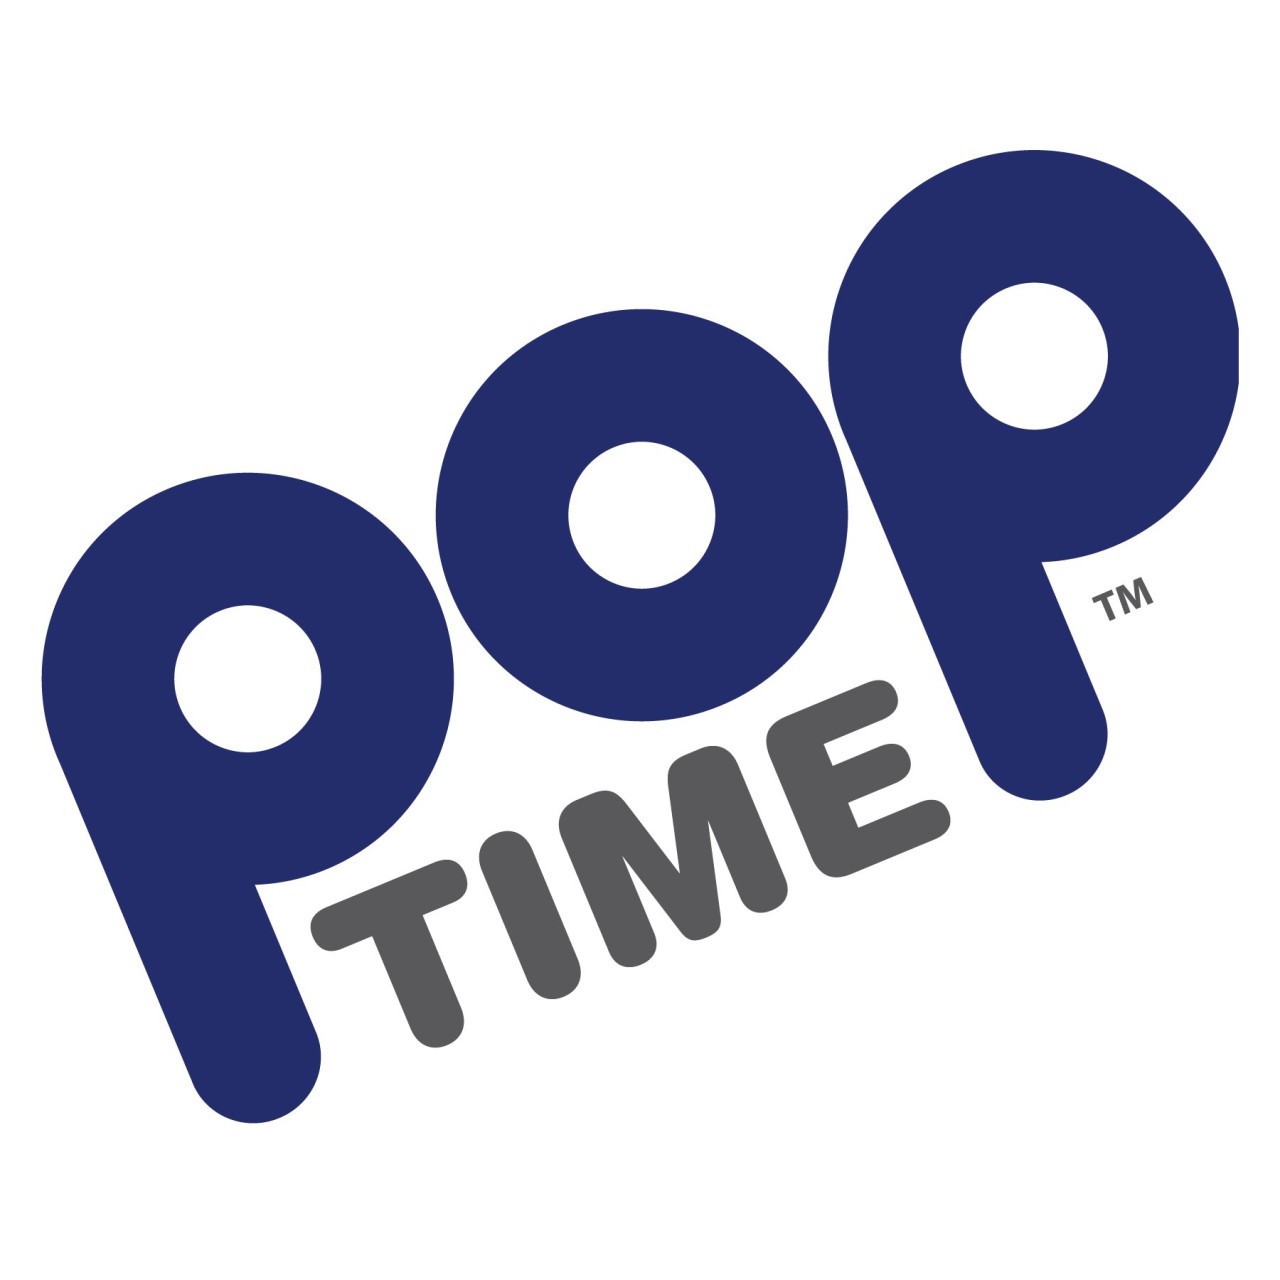 Pop Time